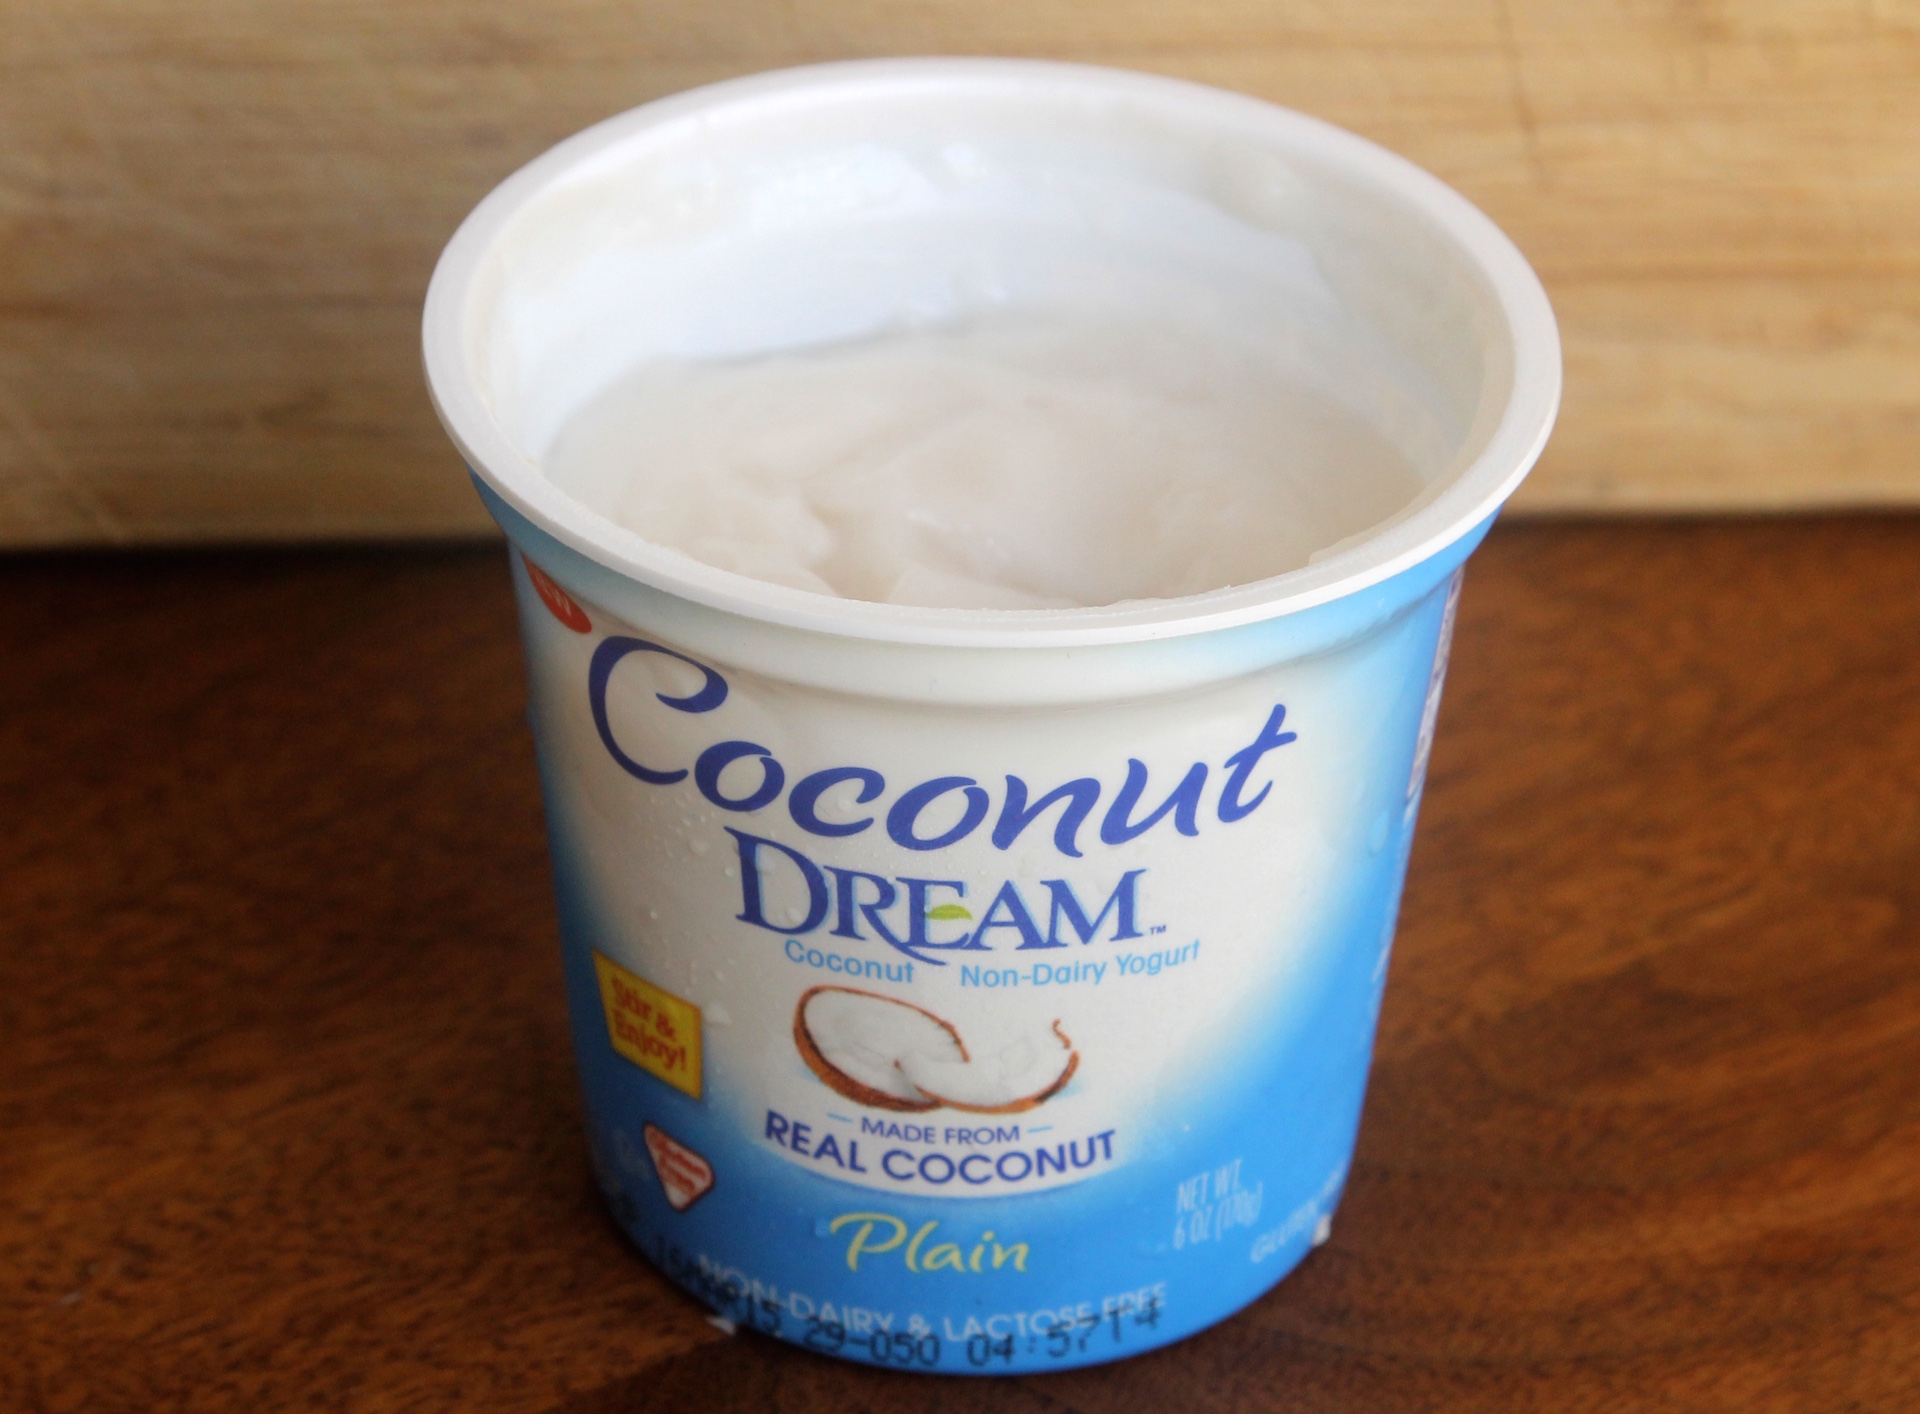 Coconut Dream yogurt. 